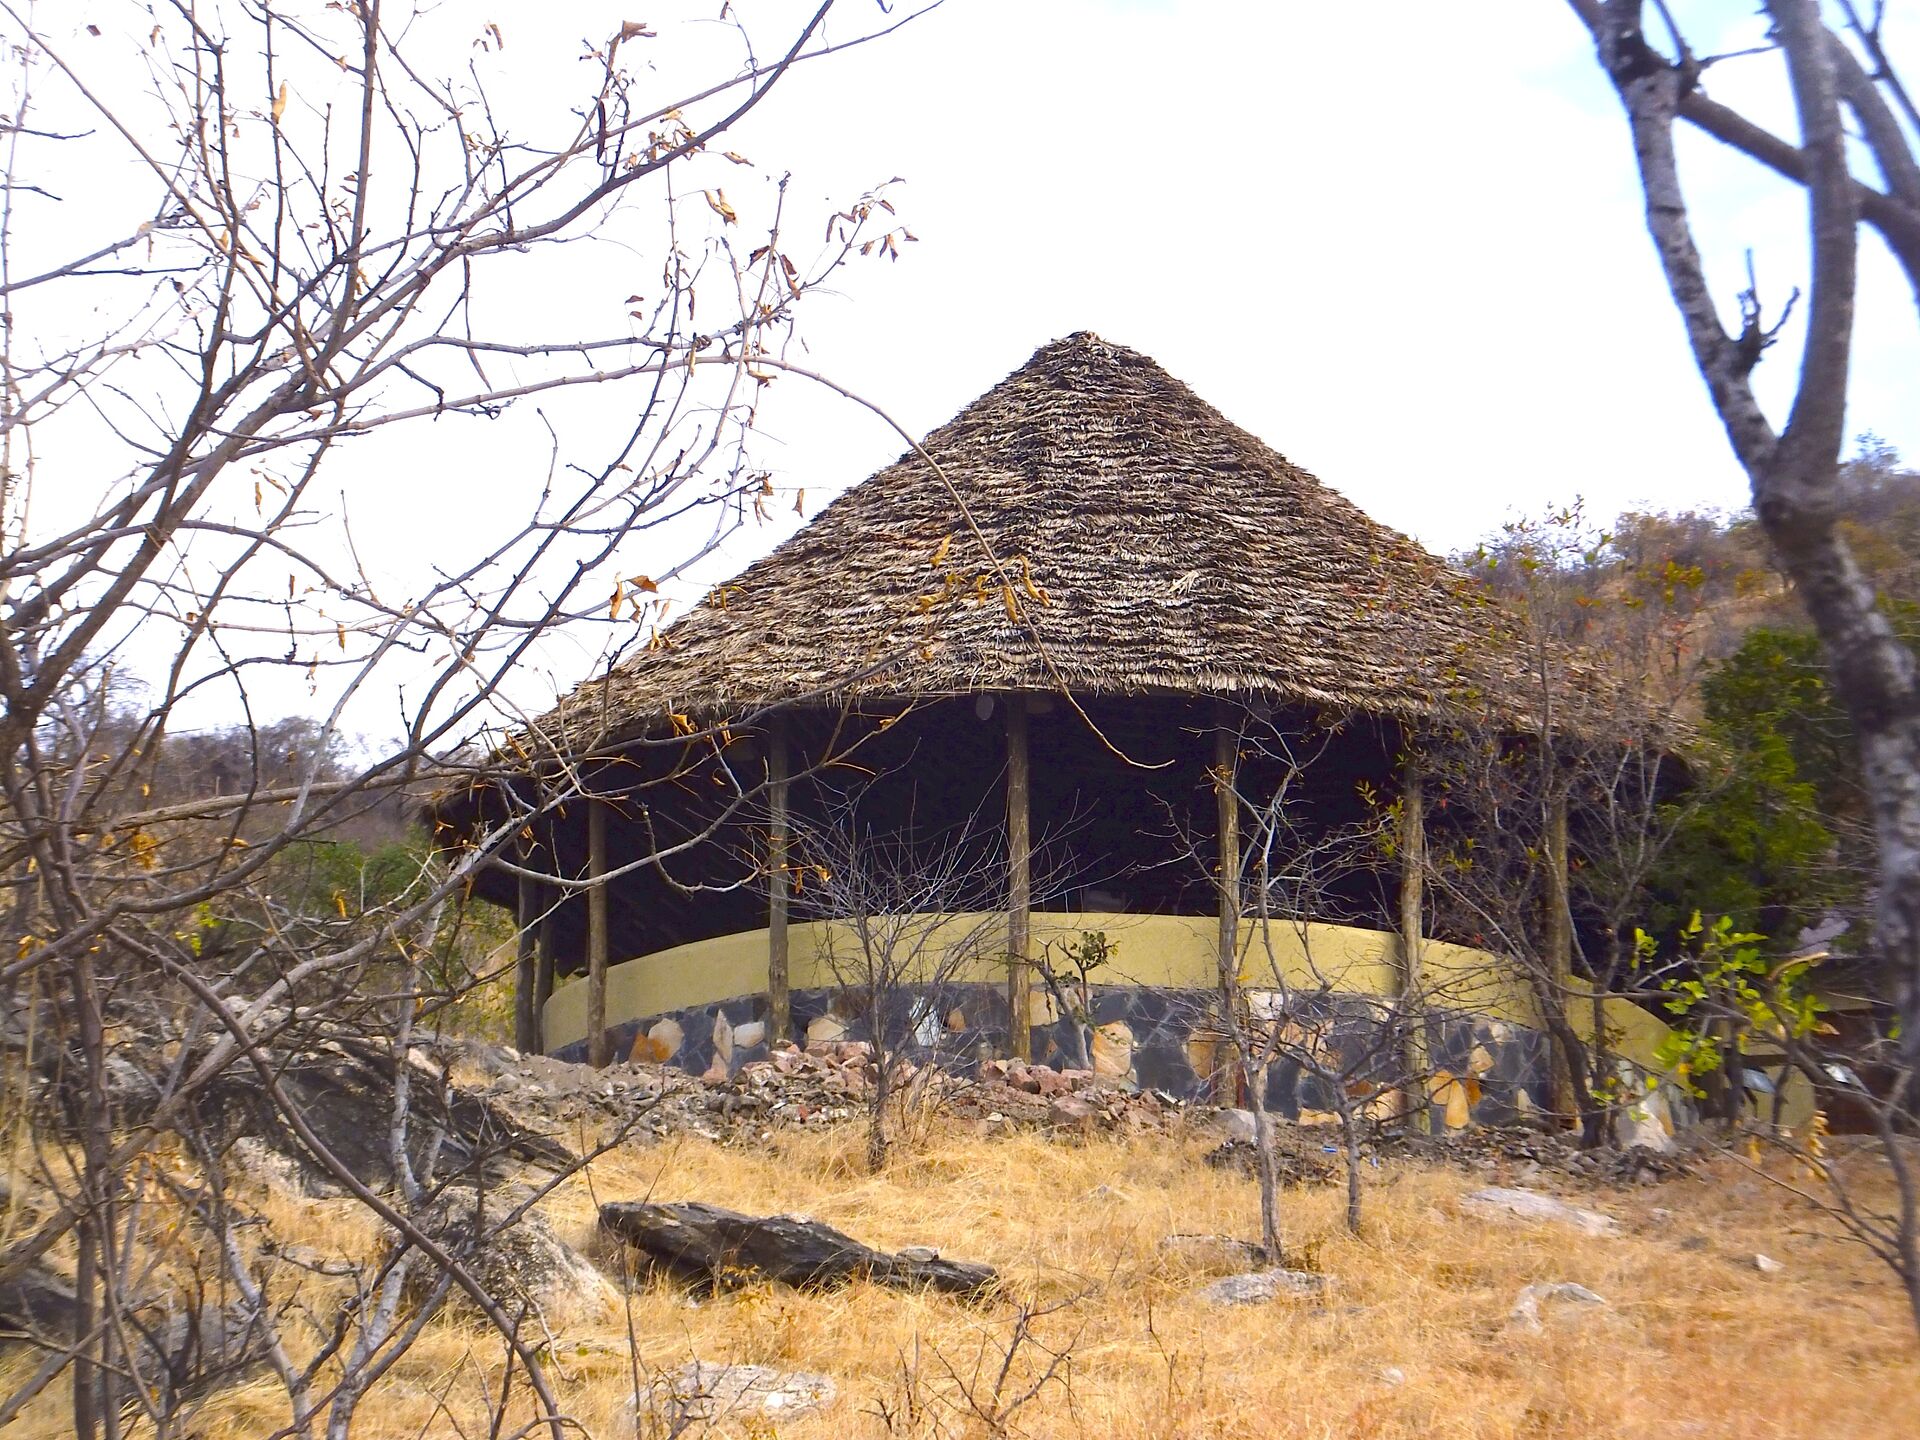 Accommodation inside and around Tarangire